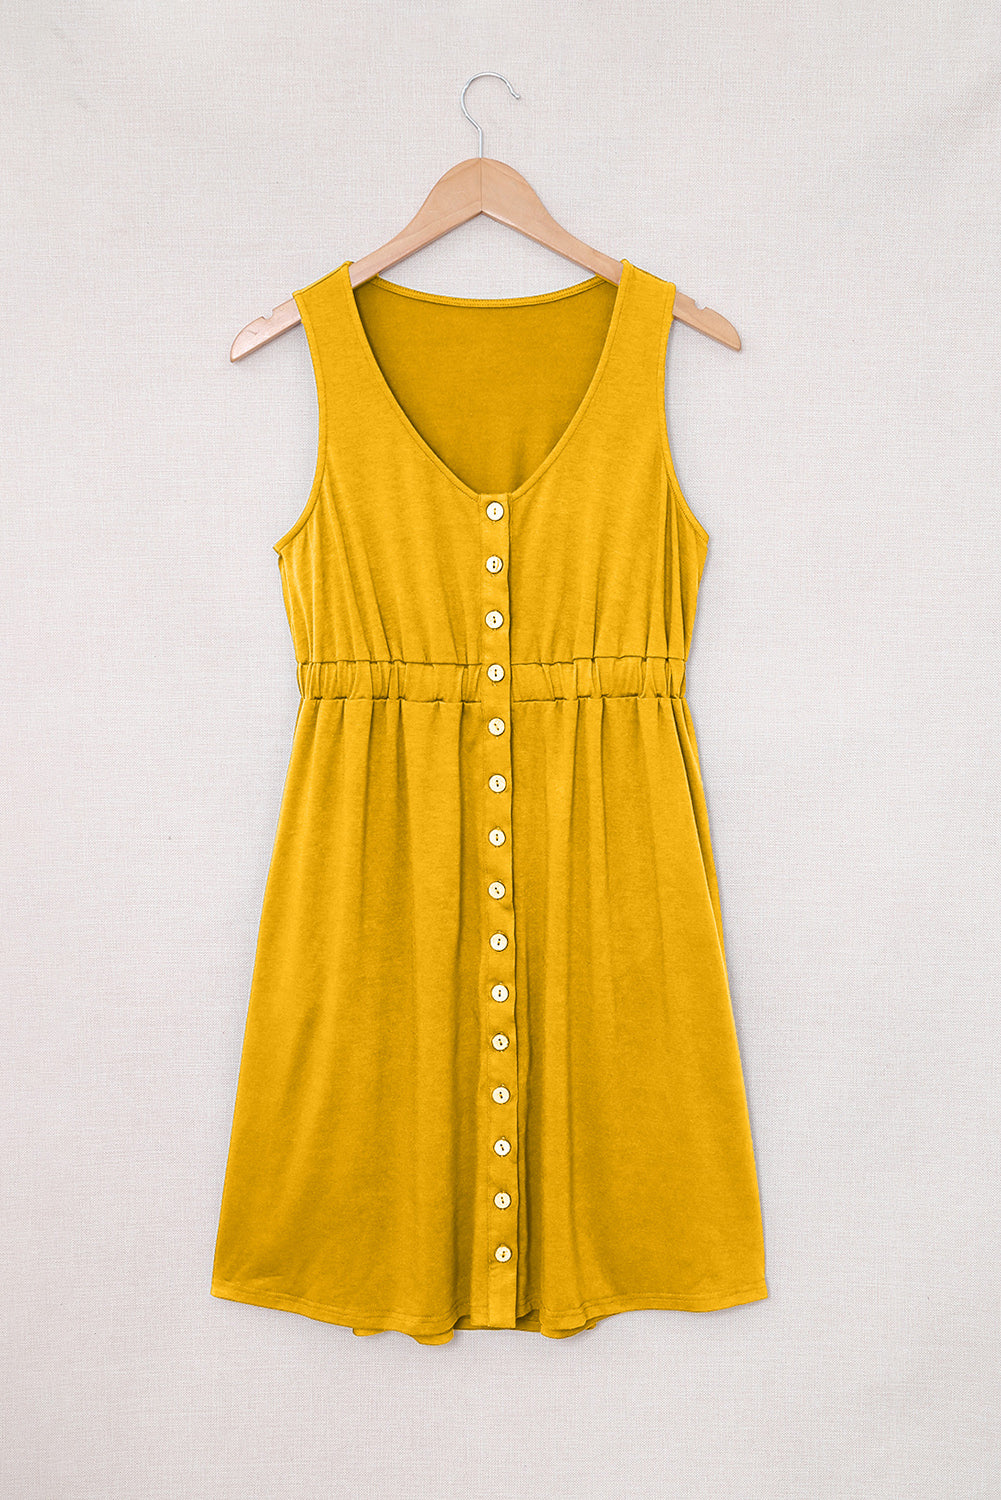 Sleeveless Button Down Mini Dress- Multiple Colors!